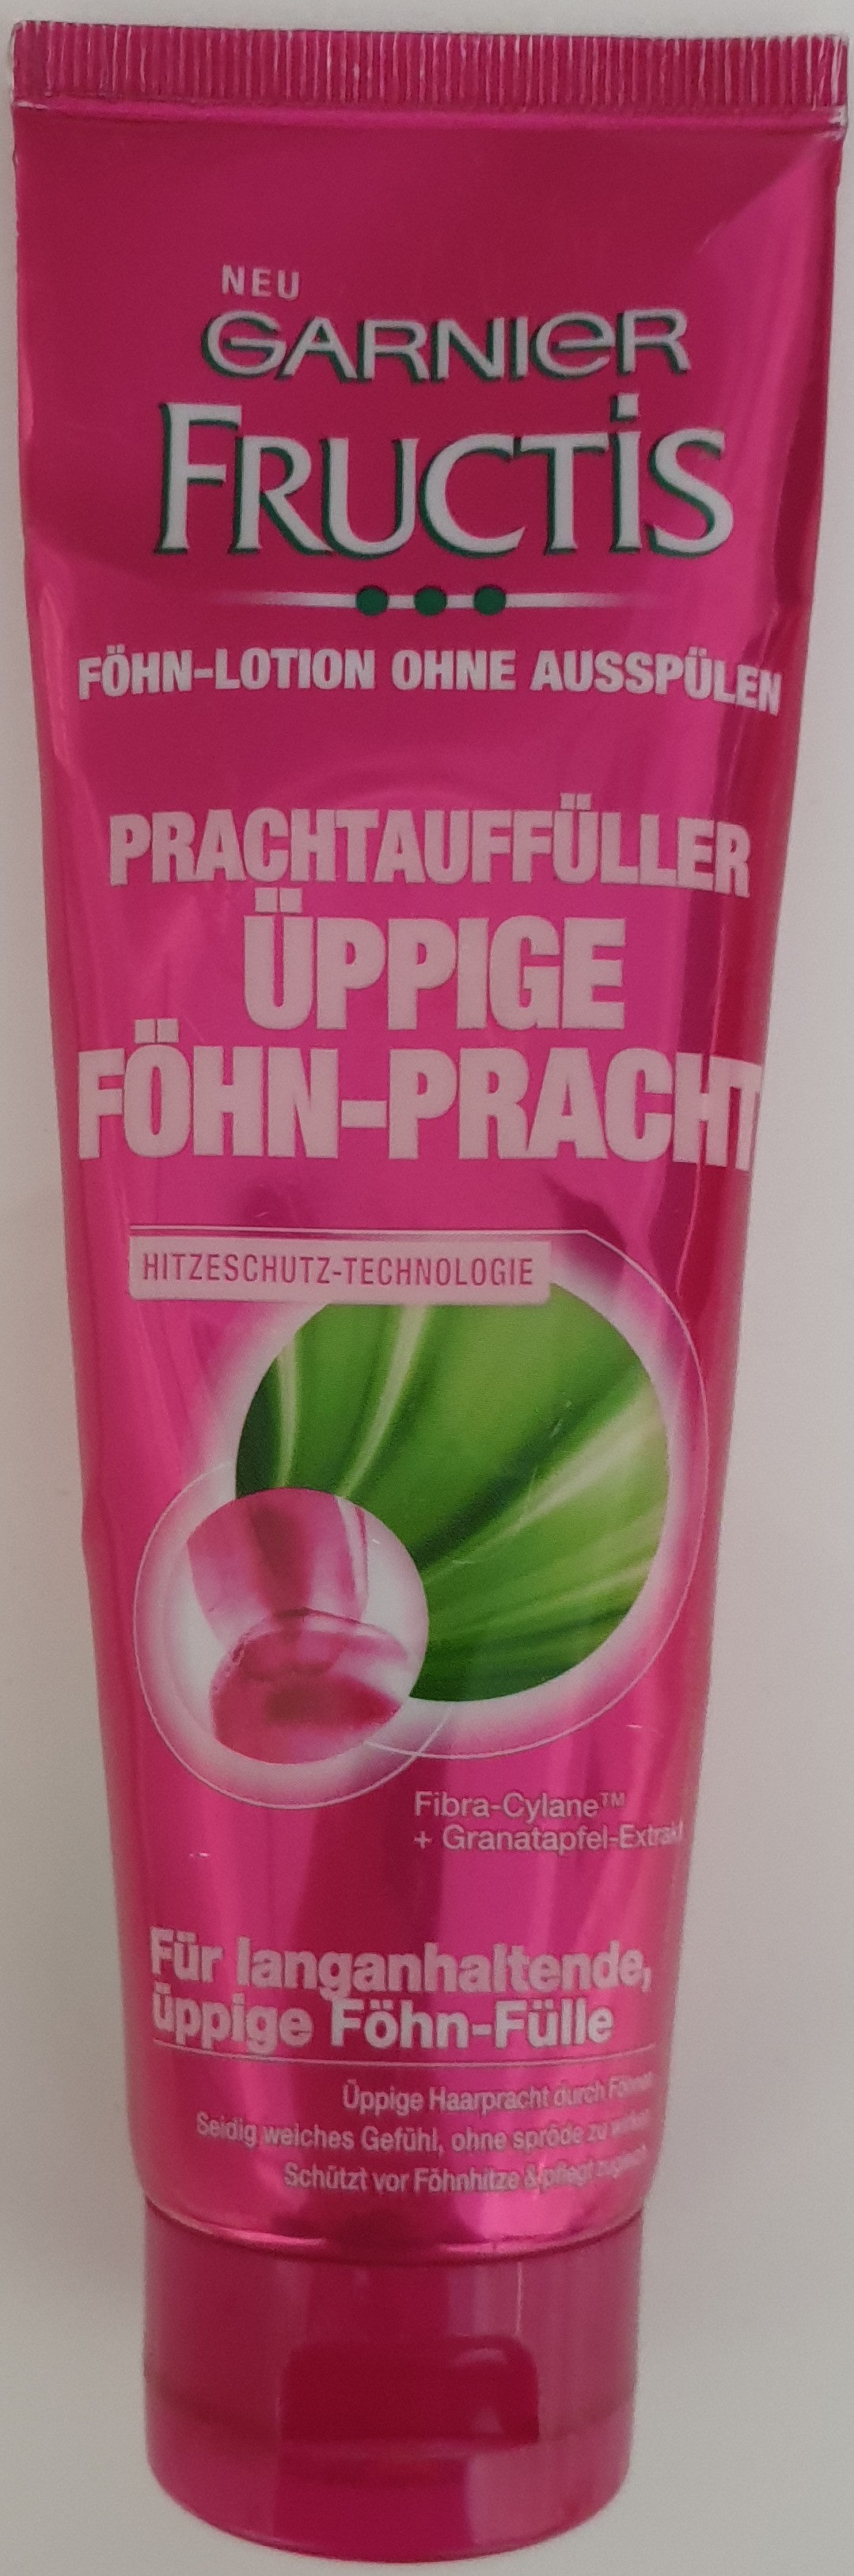 Fructis Prachtauffüller Föhn-Pracht - Tuote - de